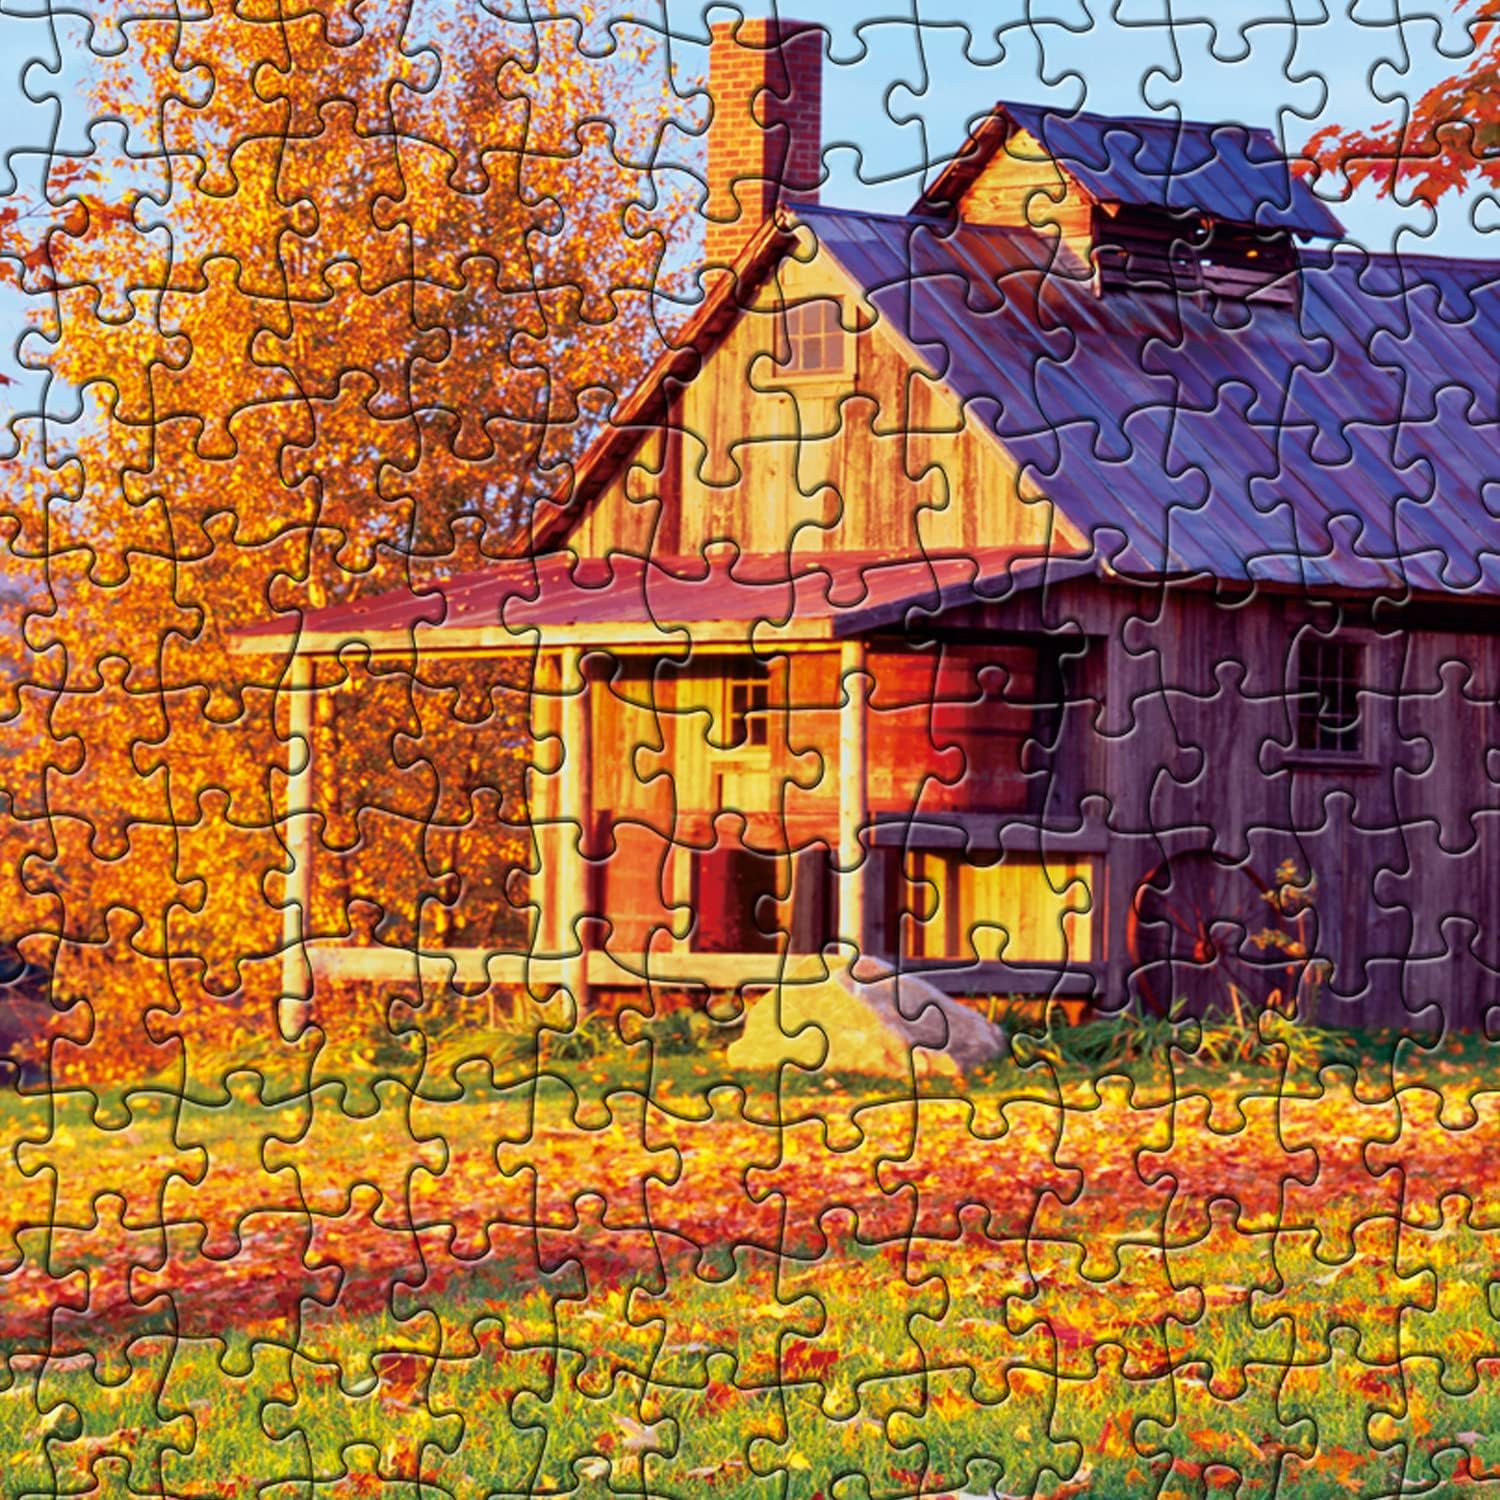 Pickforu® Country Cottage Jigsaw Puzzles 1000 Piece